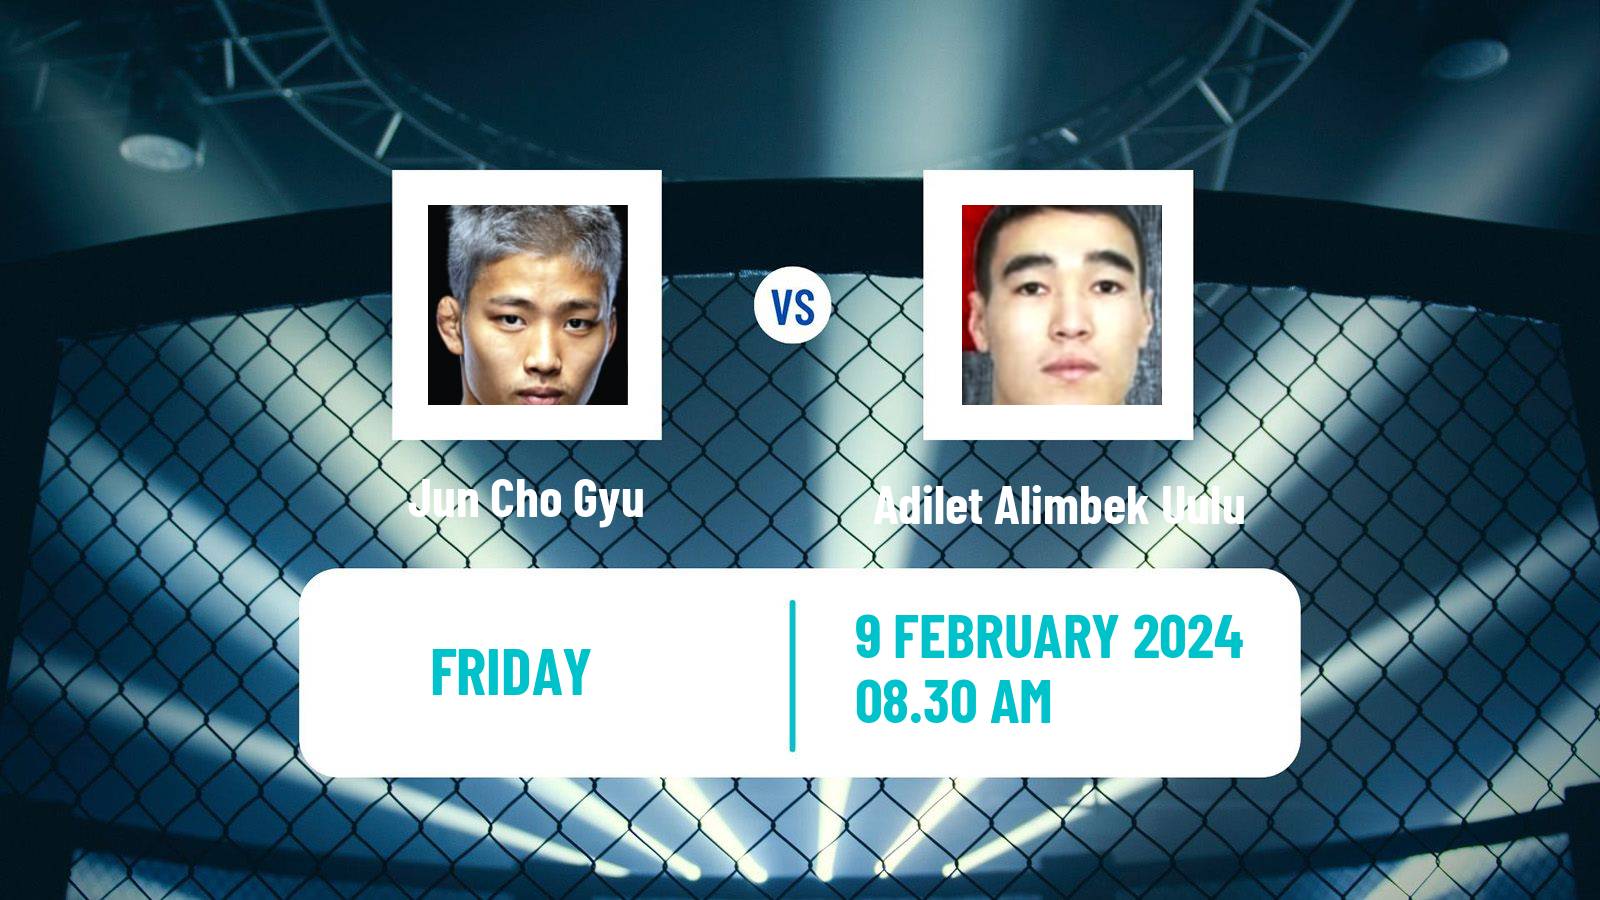 MMA Featherweight One Championship Men Jun Cho Gyu - Adilet Alimbek Uulu